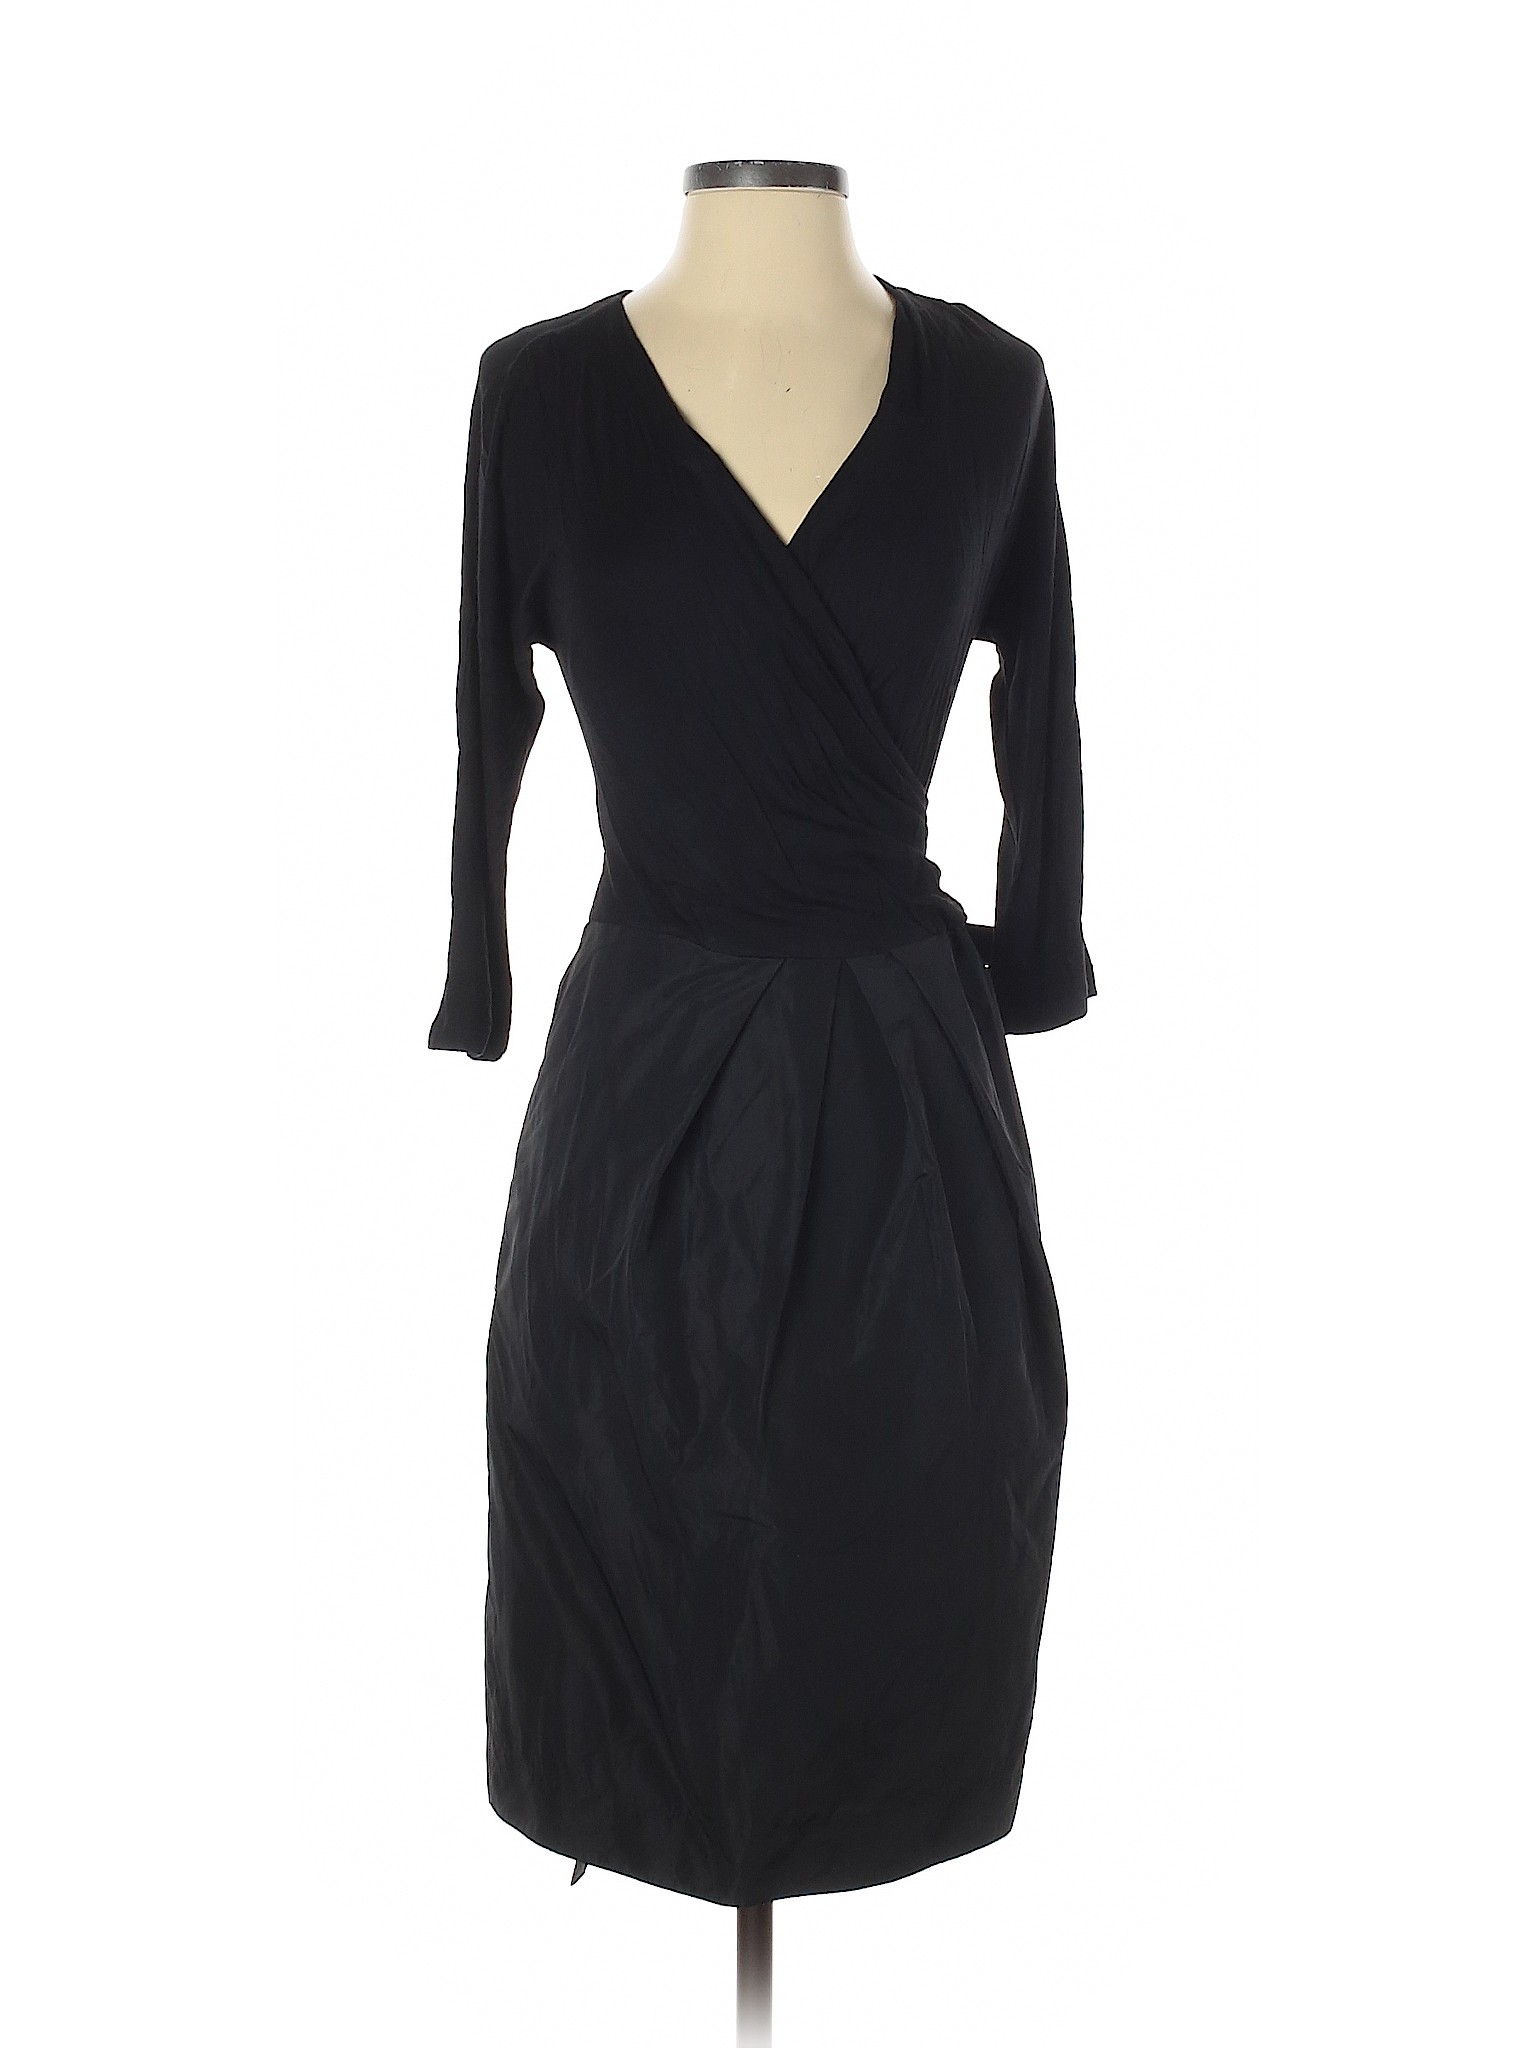 Basque Women Black Casual Dress P | eBay